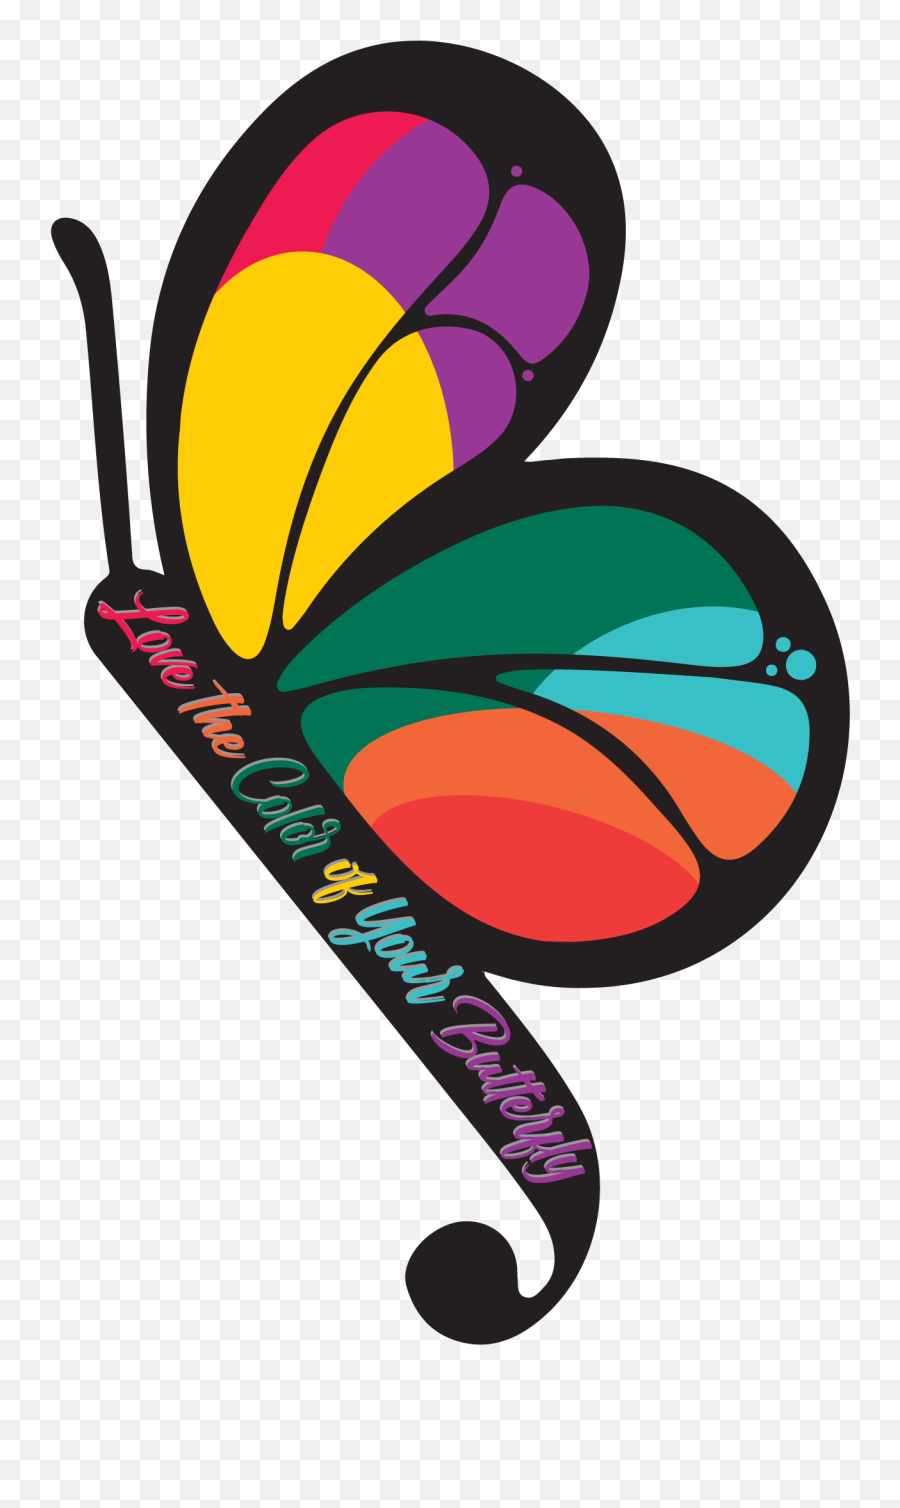 Love The Color Of Your Butterfly U2014 Janinah Burnett Emoji,Emotion Blutterfly